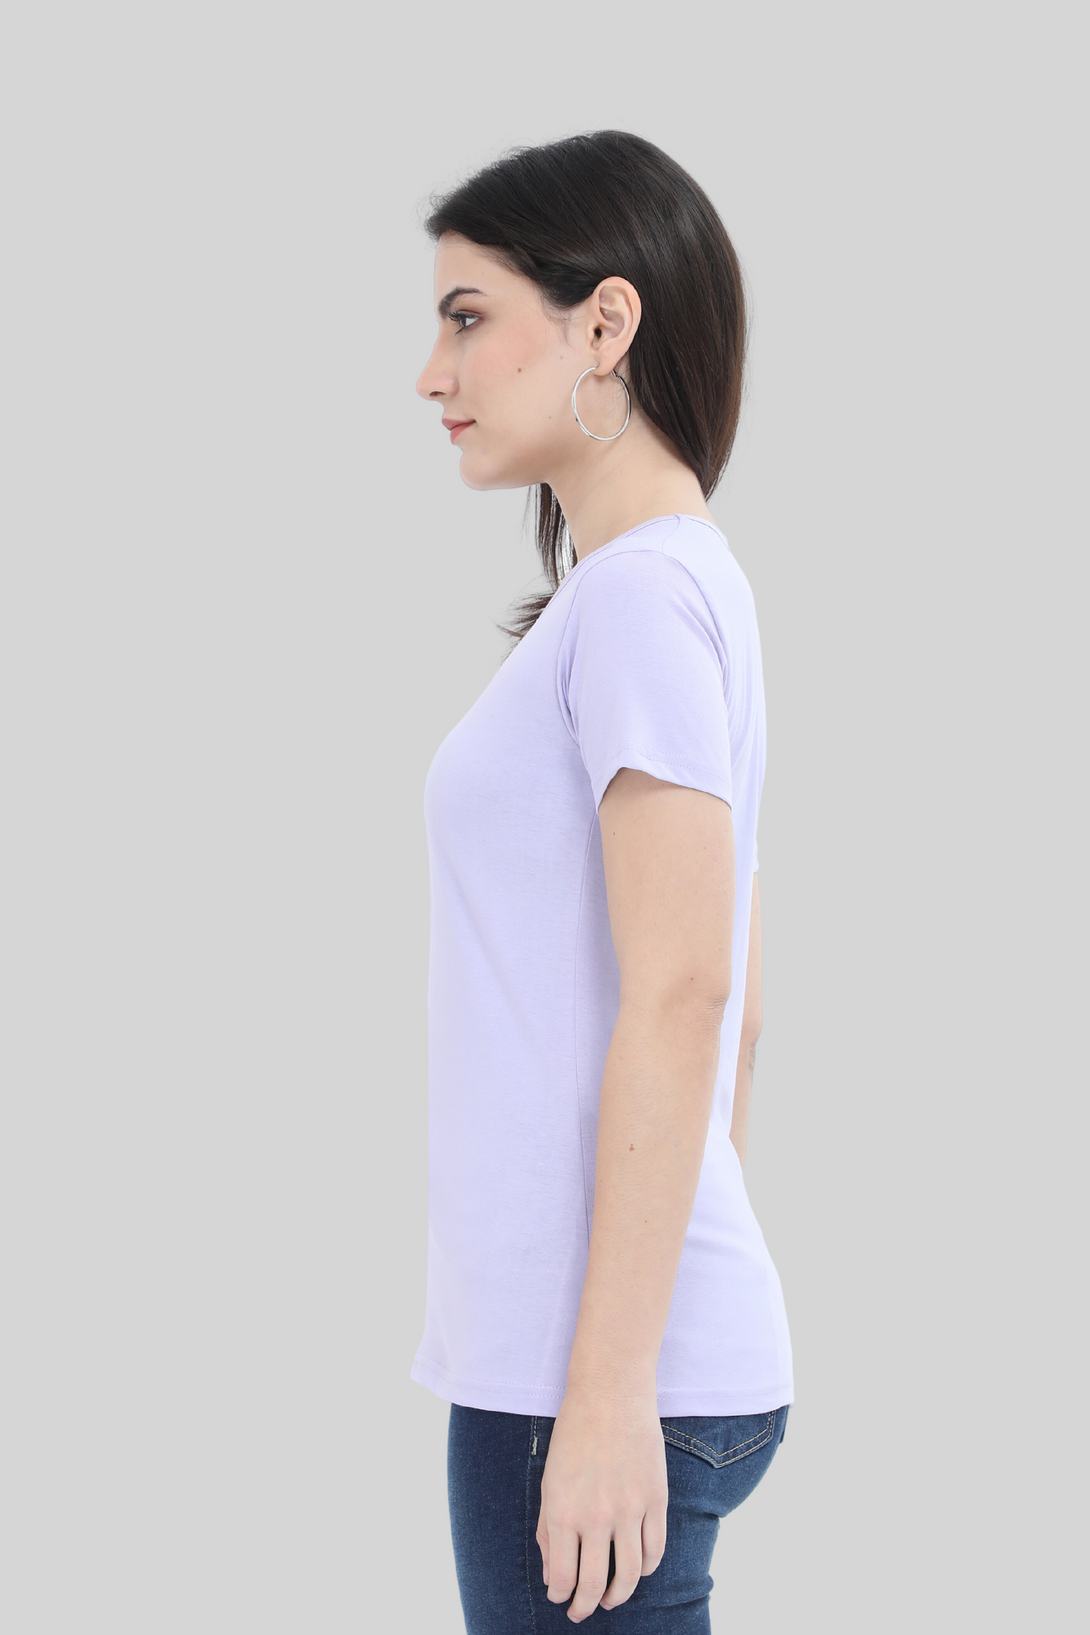 Lavender Scoop Neck T-Shirt For Women - WowWaves - 2